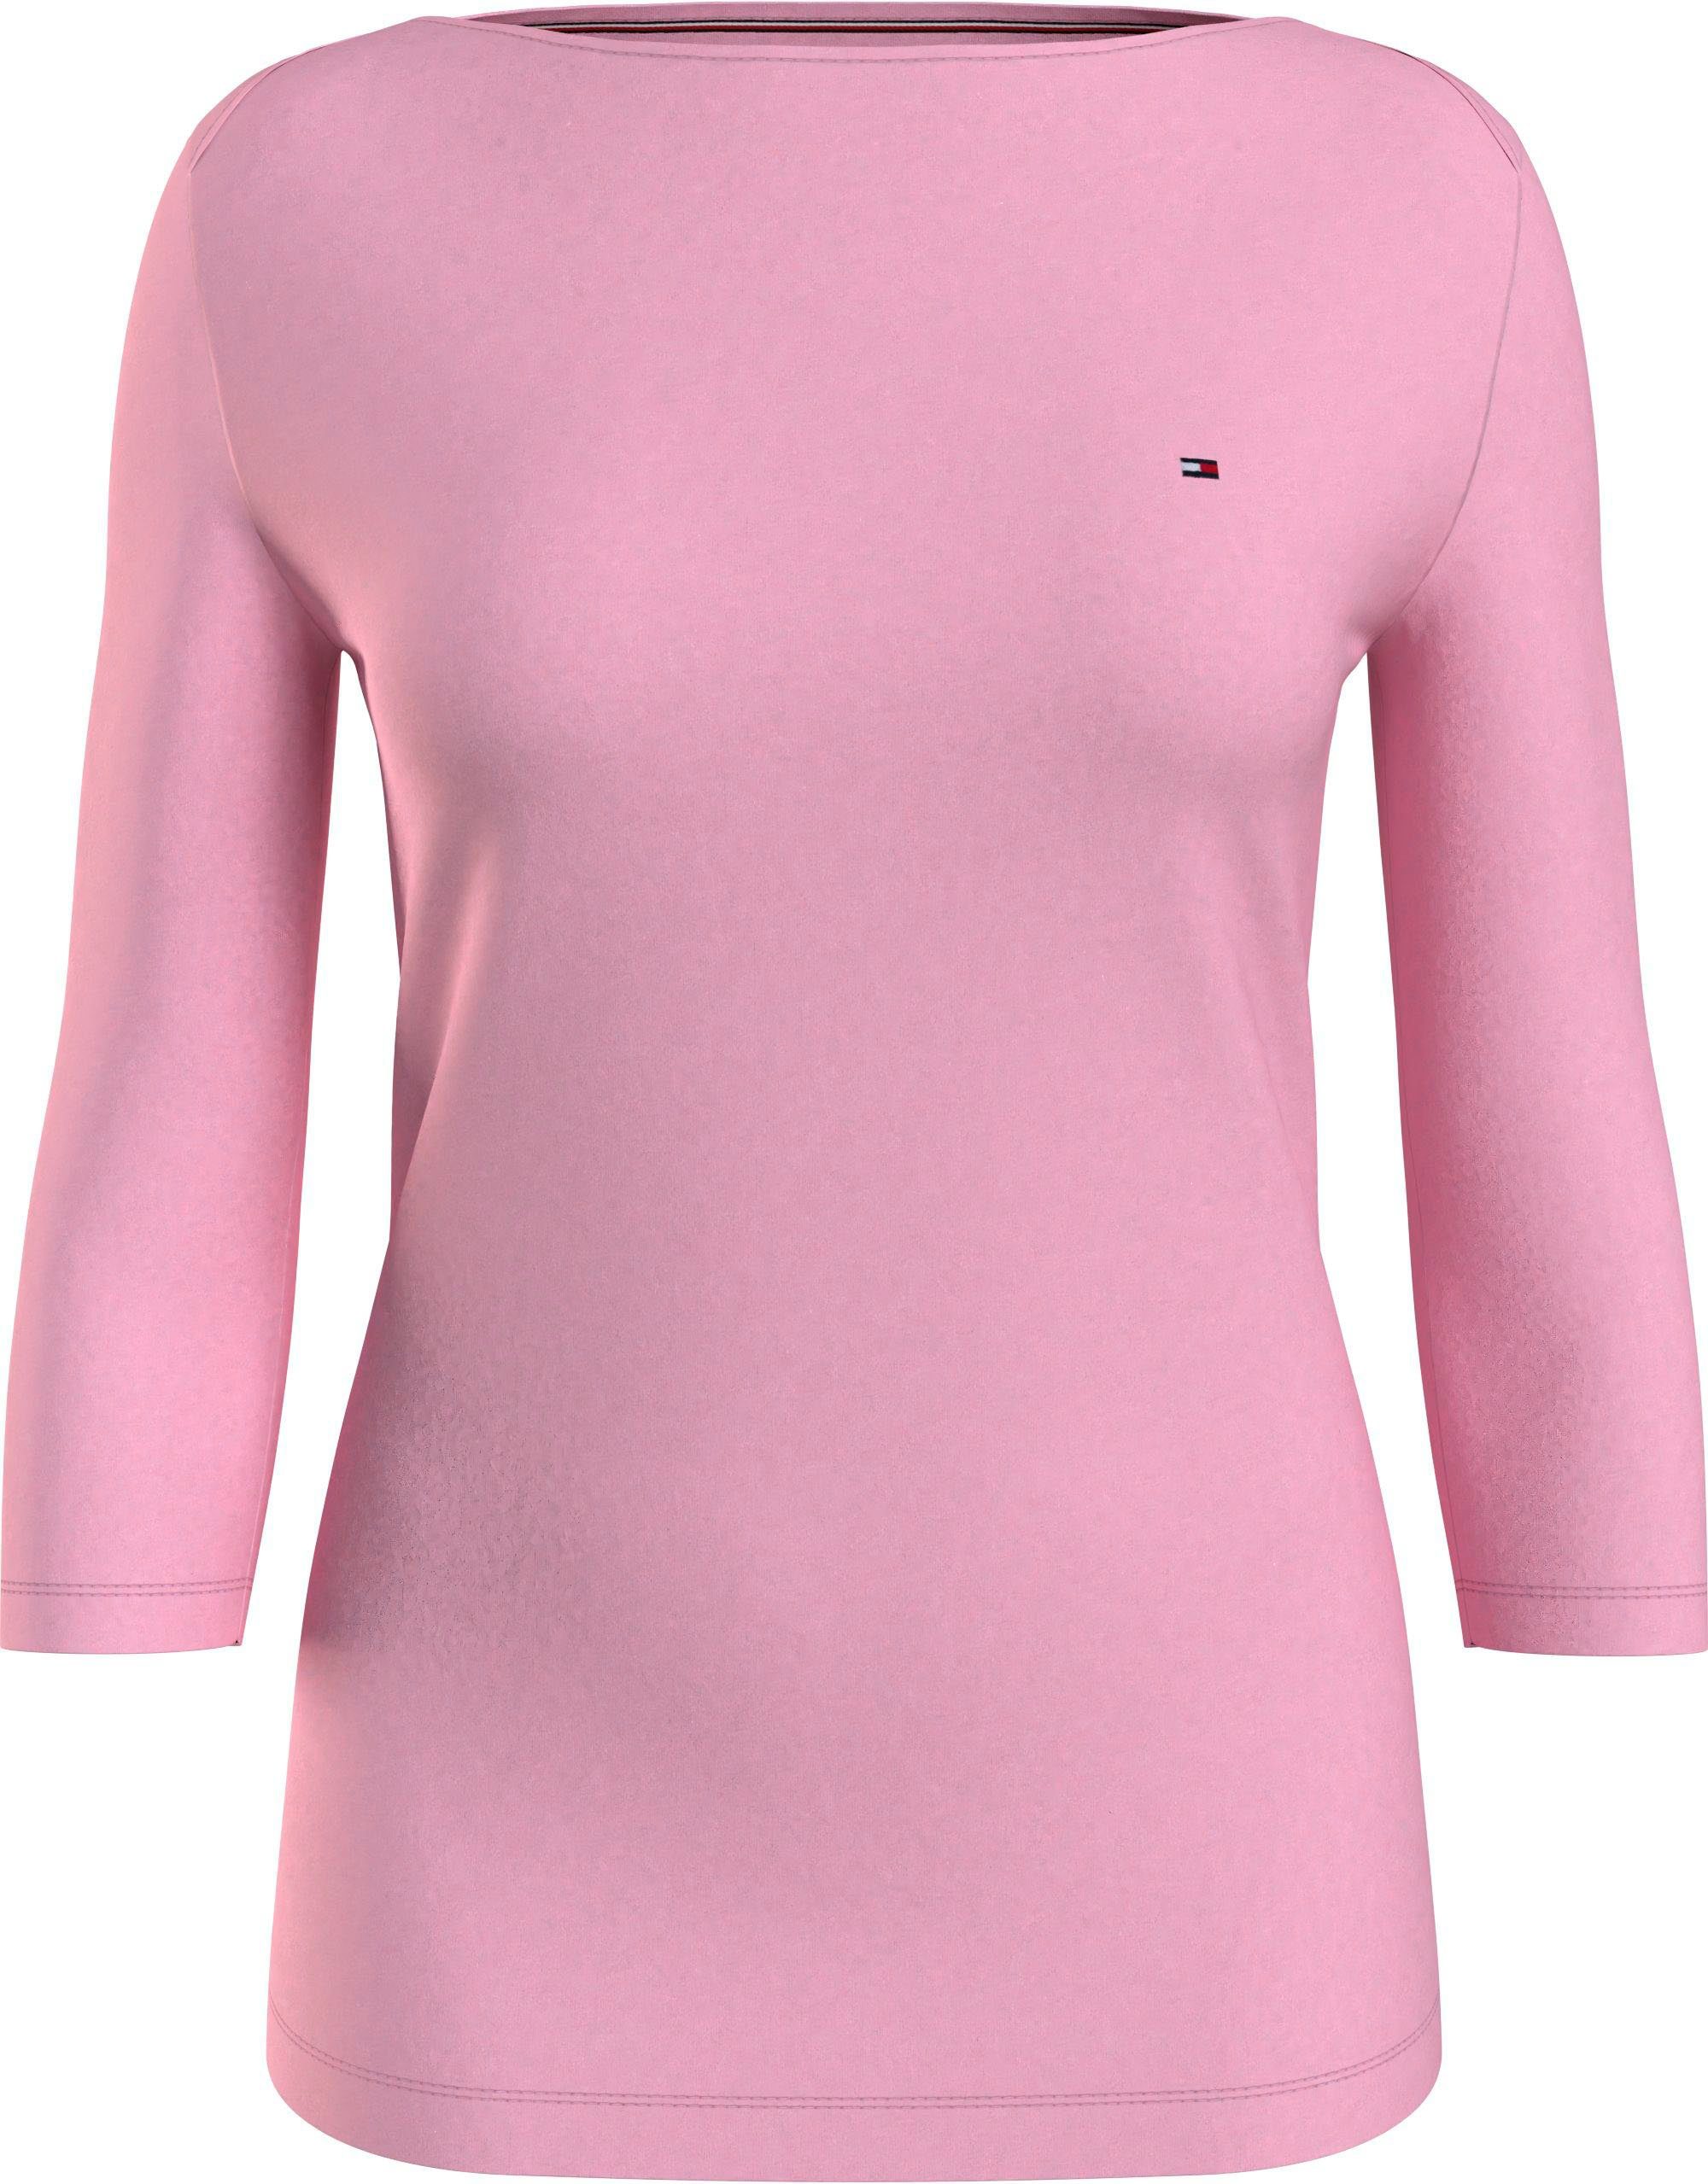 Tommy TOP CO pink Tommy-Hilfiger-Logostickerei mit SLV 3/4 BOAT-NK 3/4-Arm-Shirt ORG SLIM Hilfiger